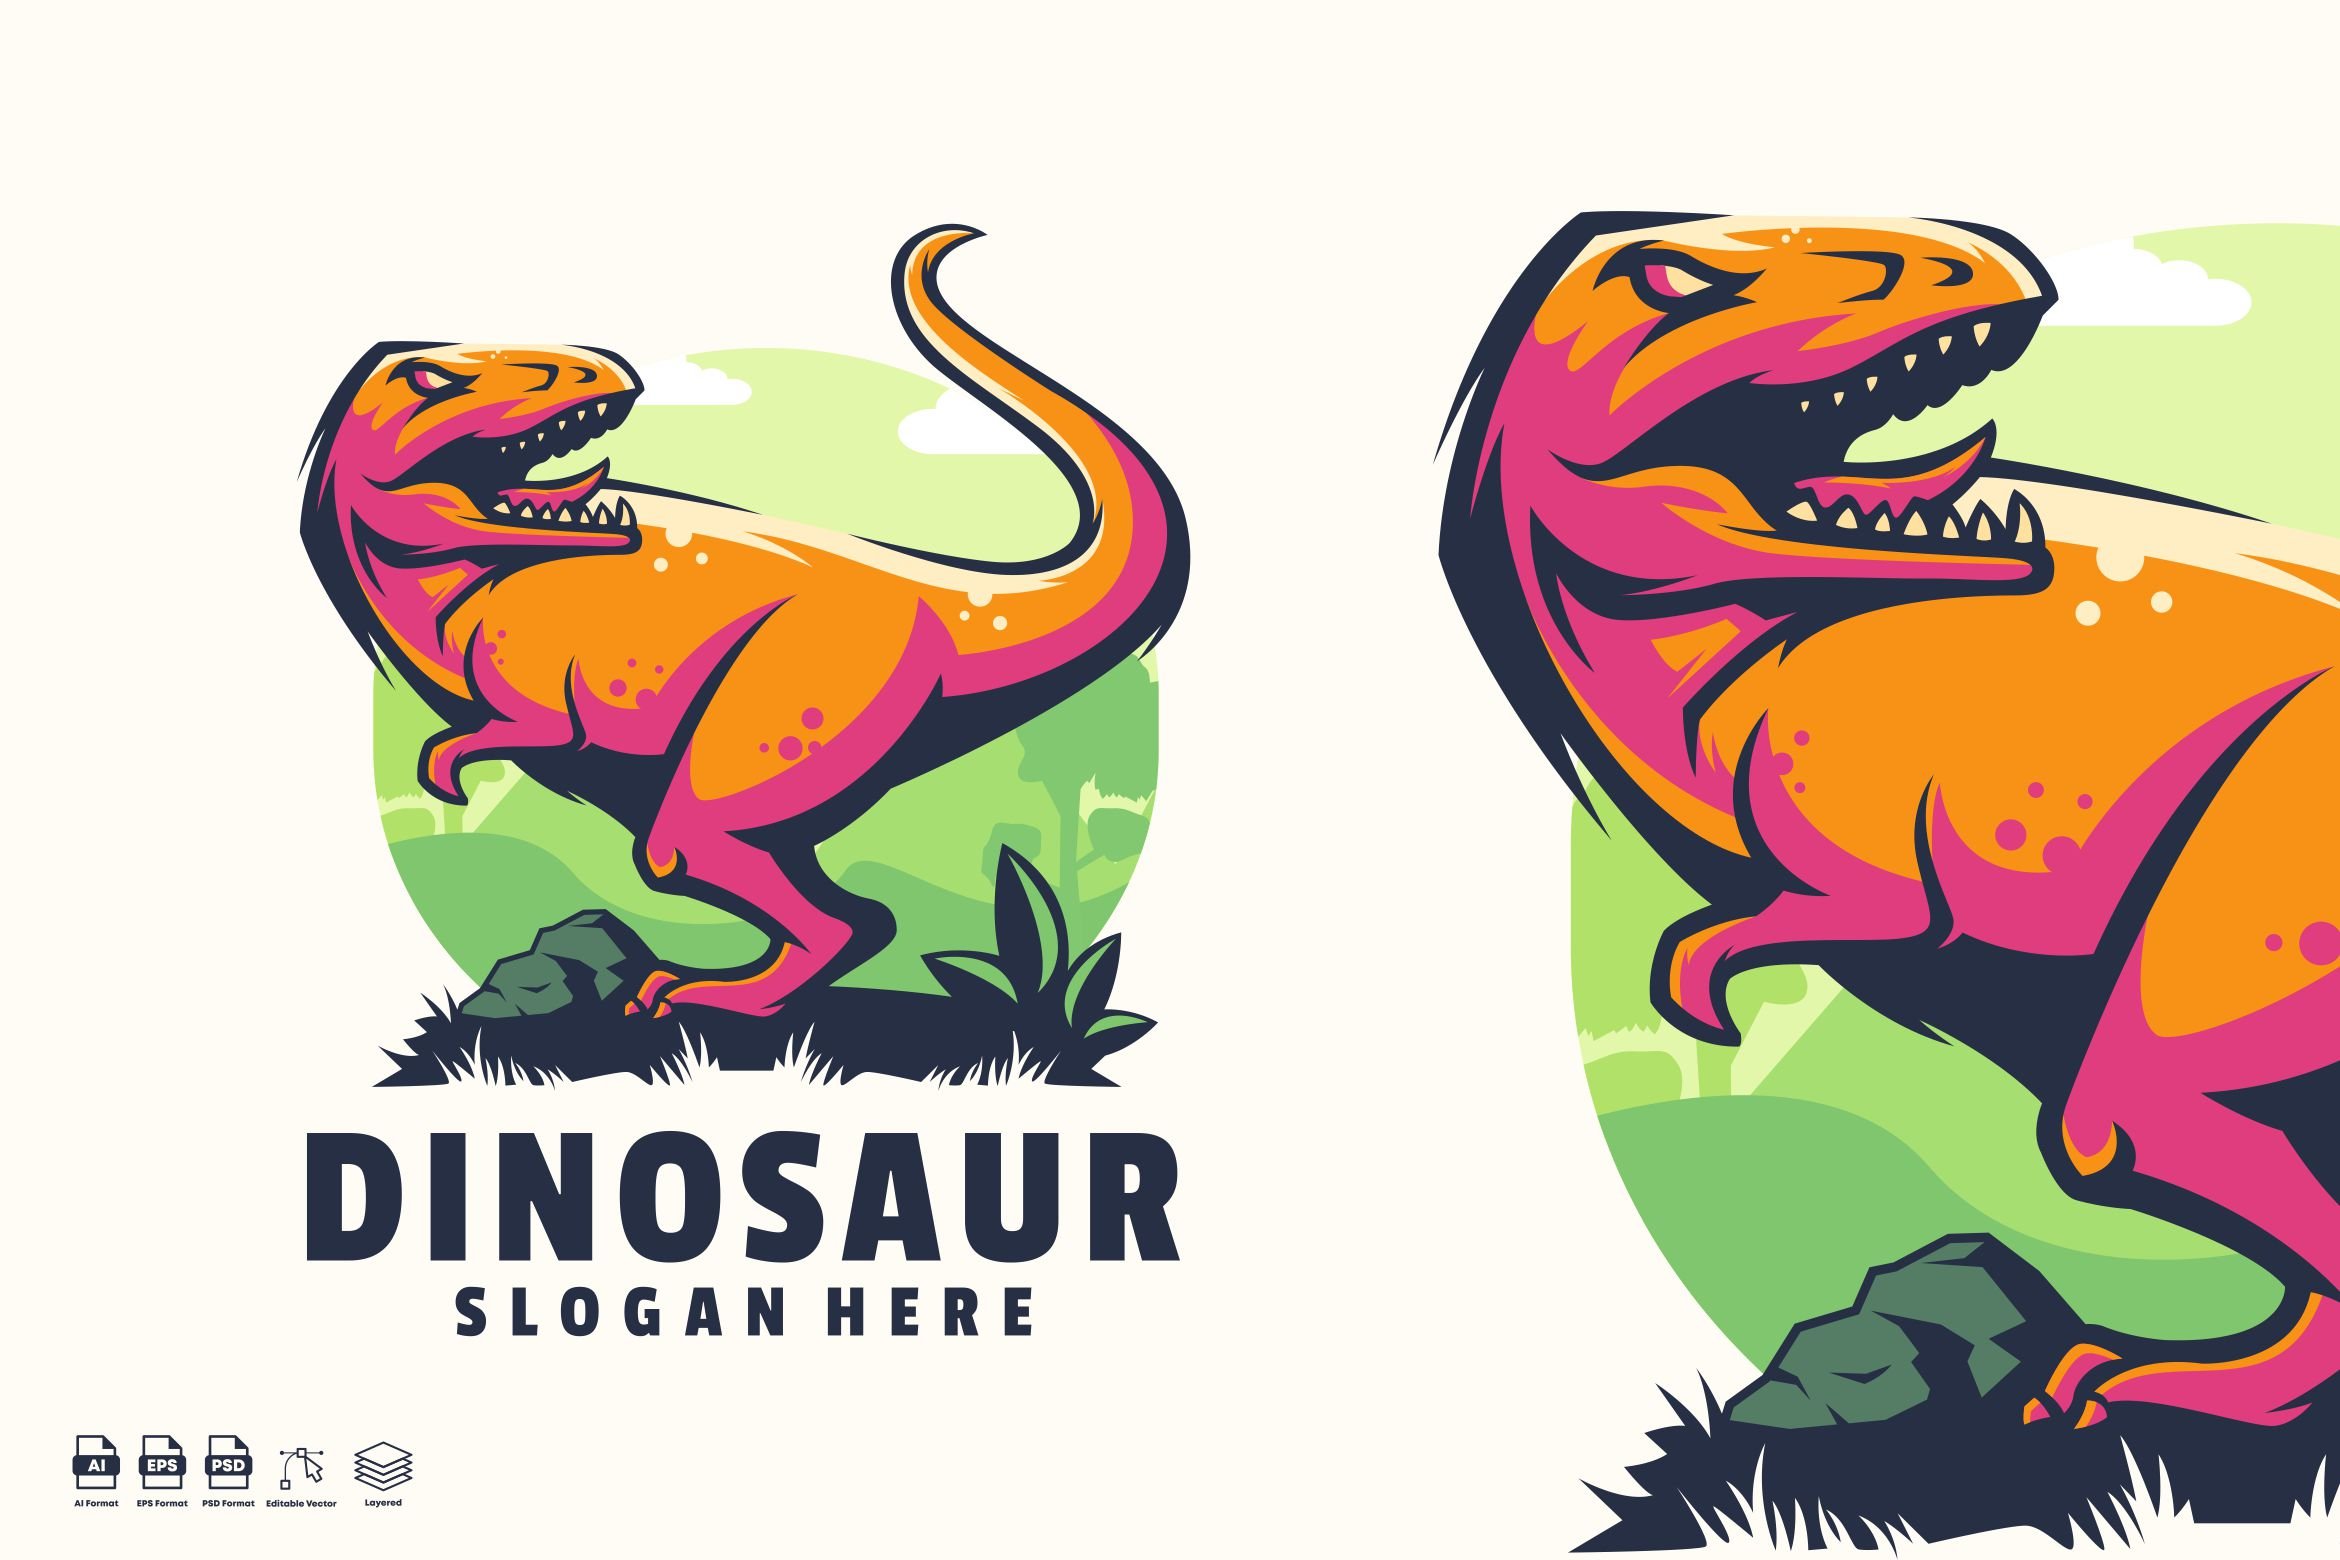 Dinosaur logo template cover image.